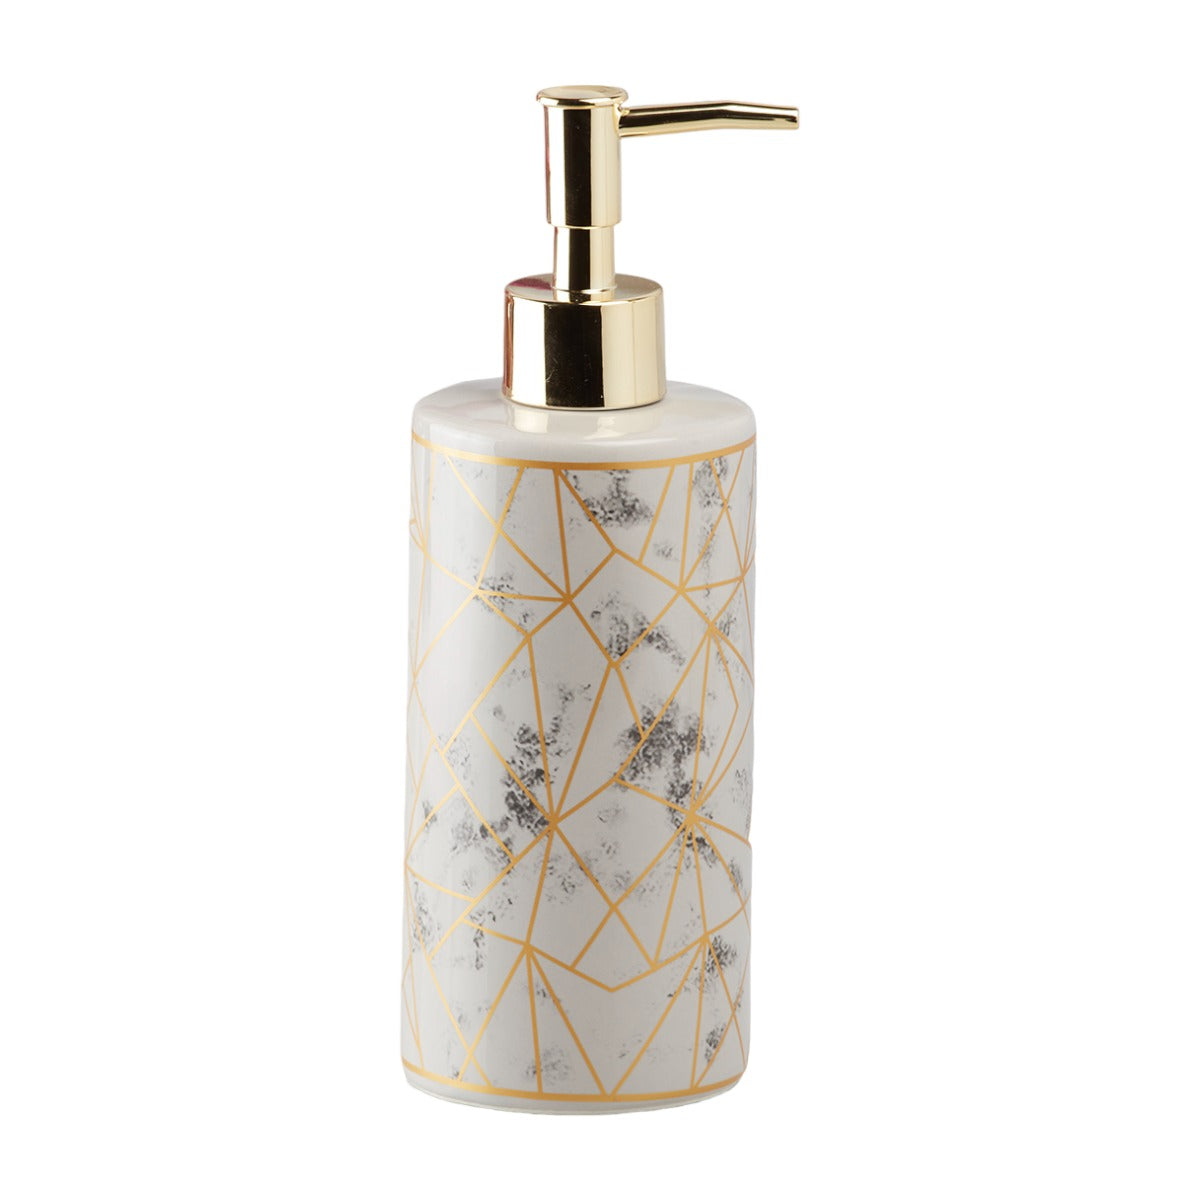 Ceramic Soap Dispenser Pump for Bathroom for Bath Gel, Lotion, Shampoo (10211)